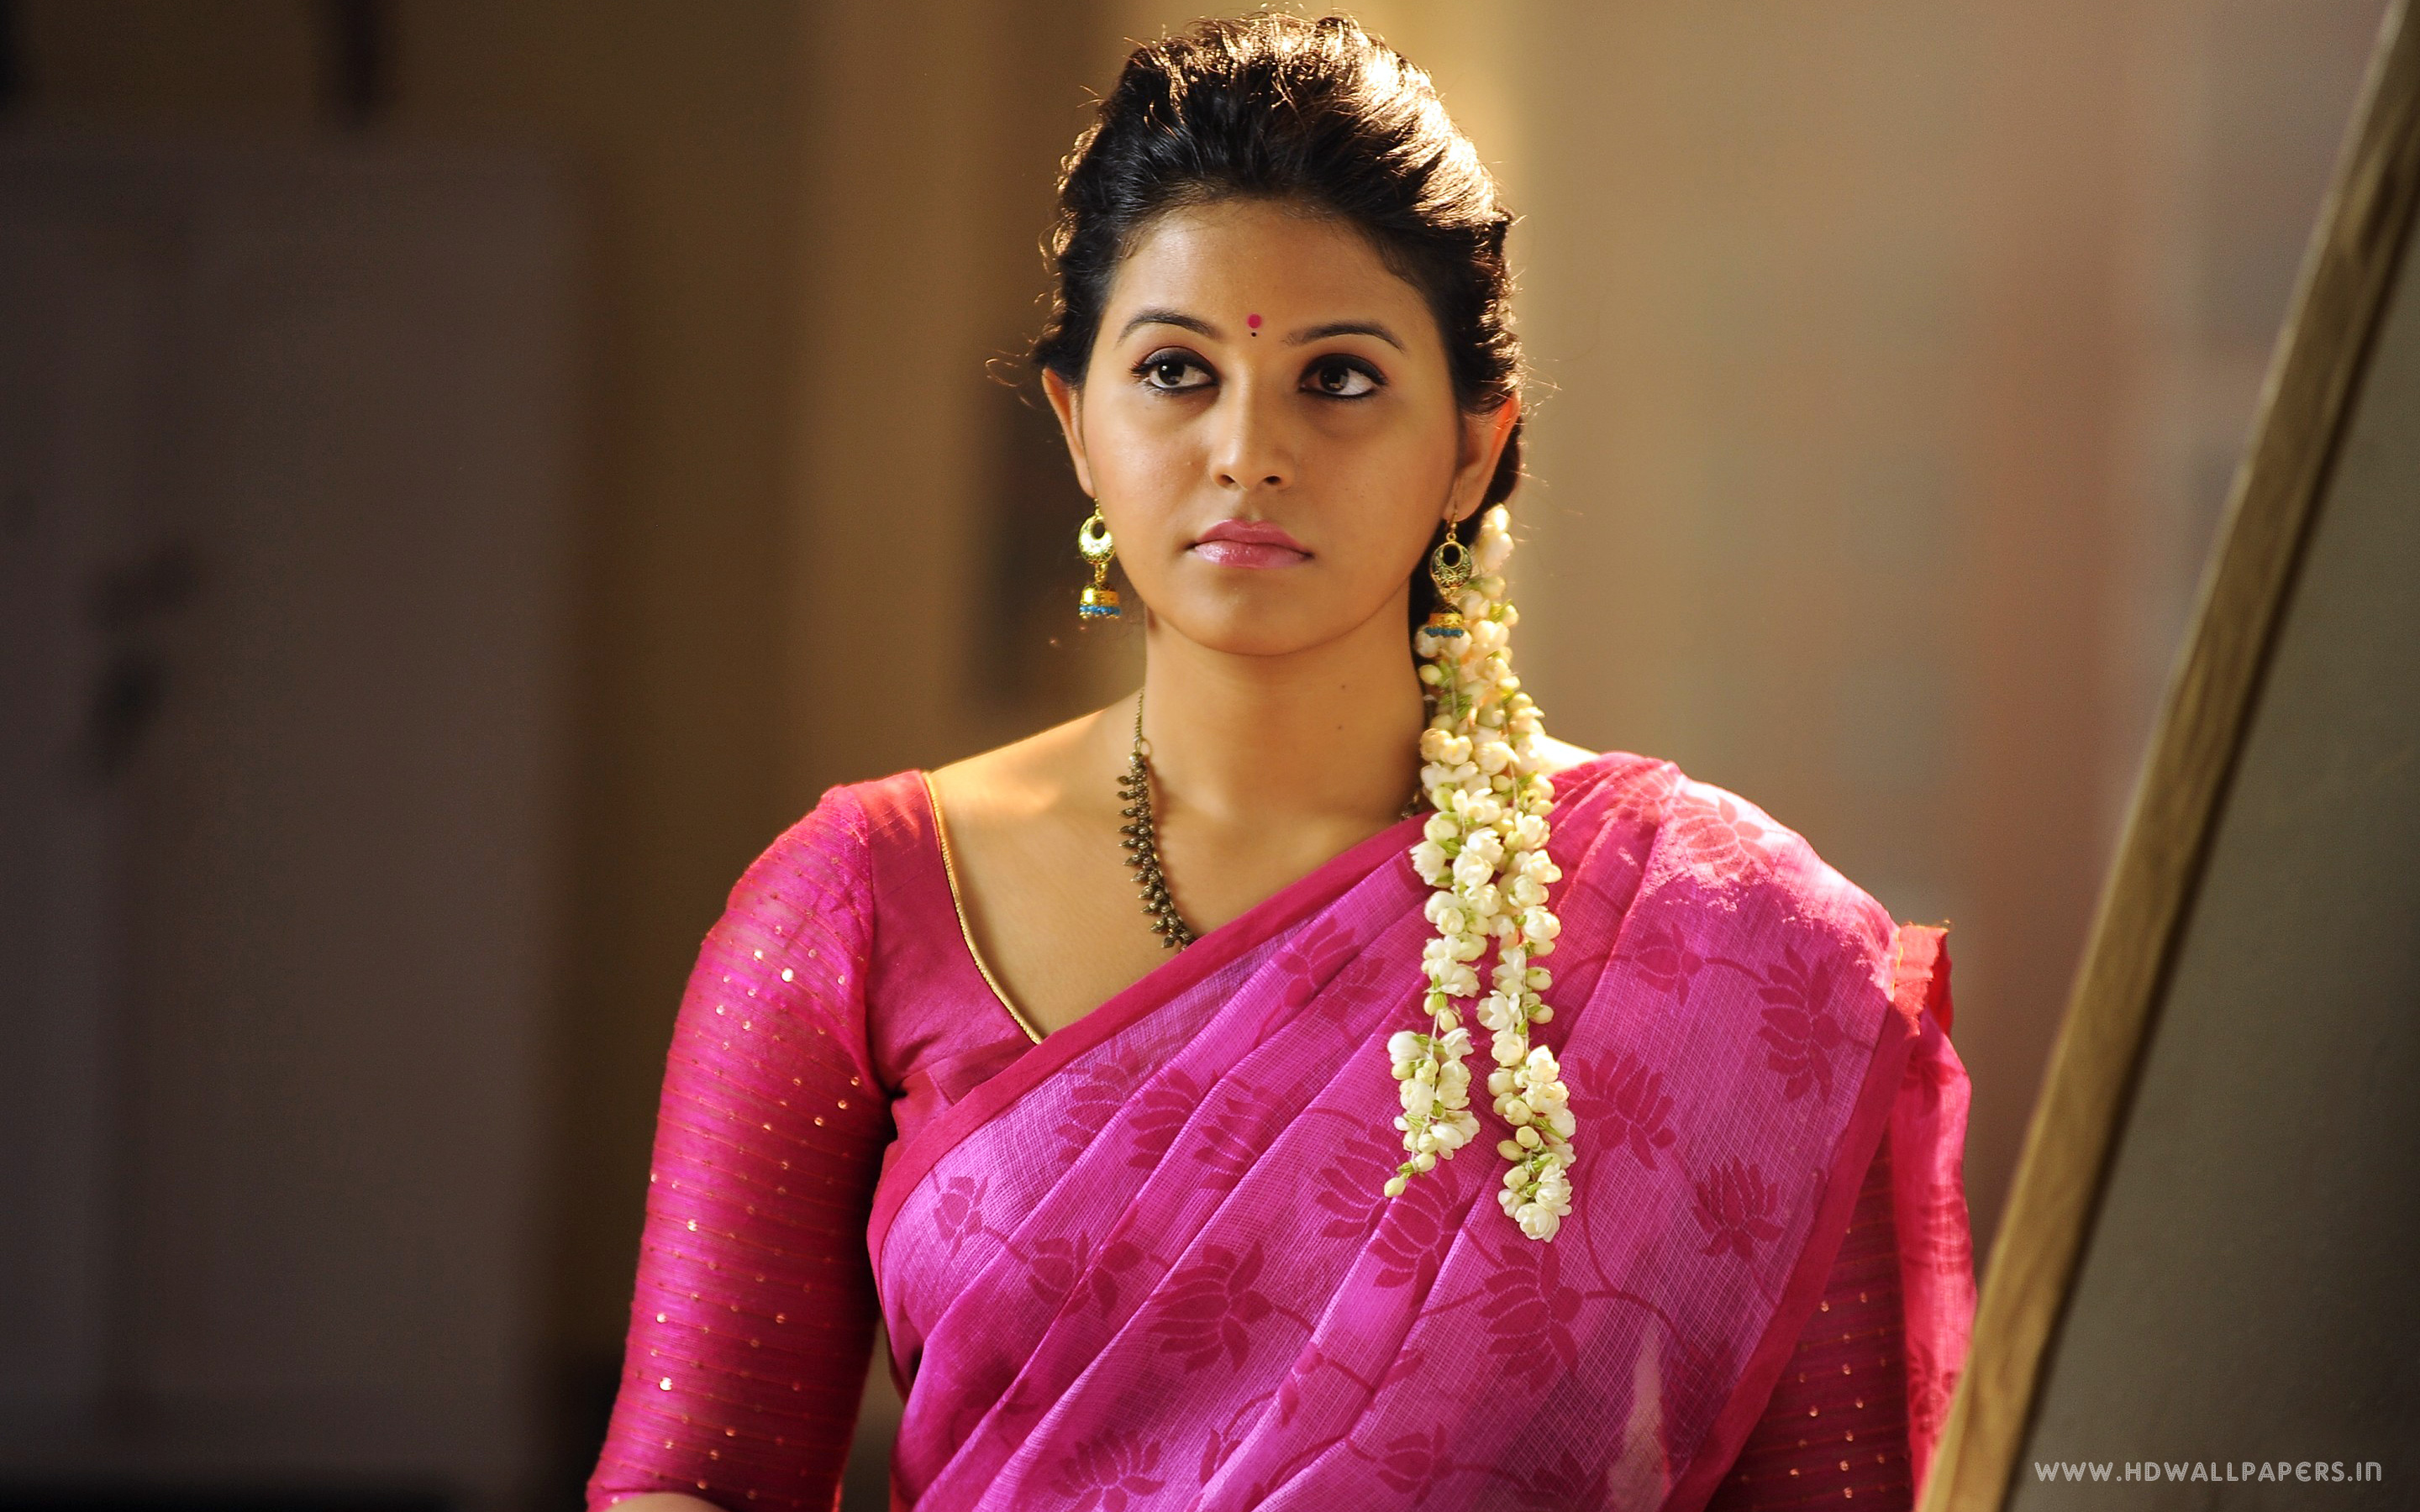 Tamil Actress Hd Photos Free Download : Actress Tamil Hot Namitha ...